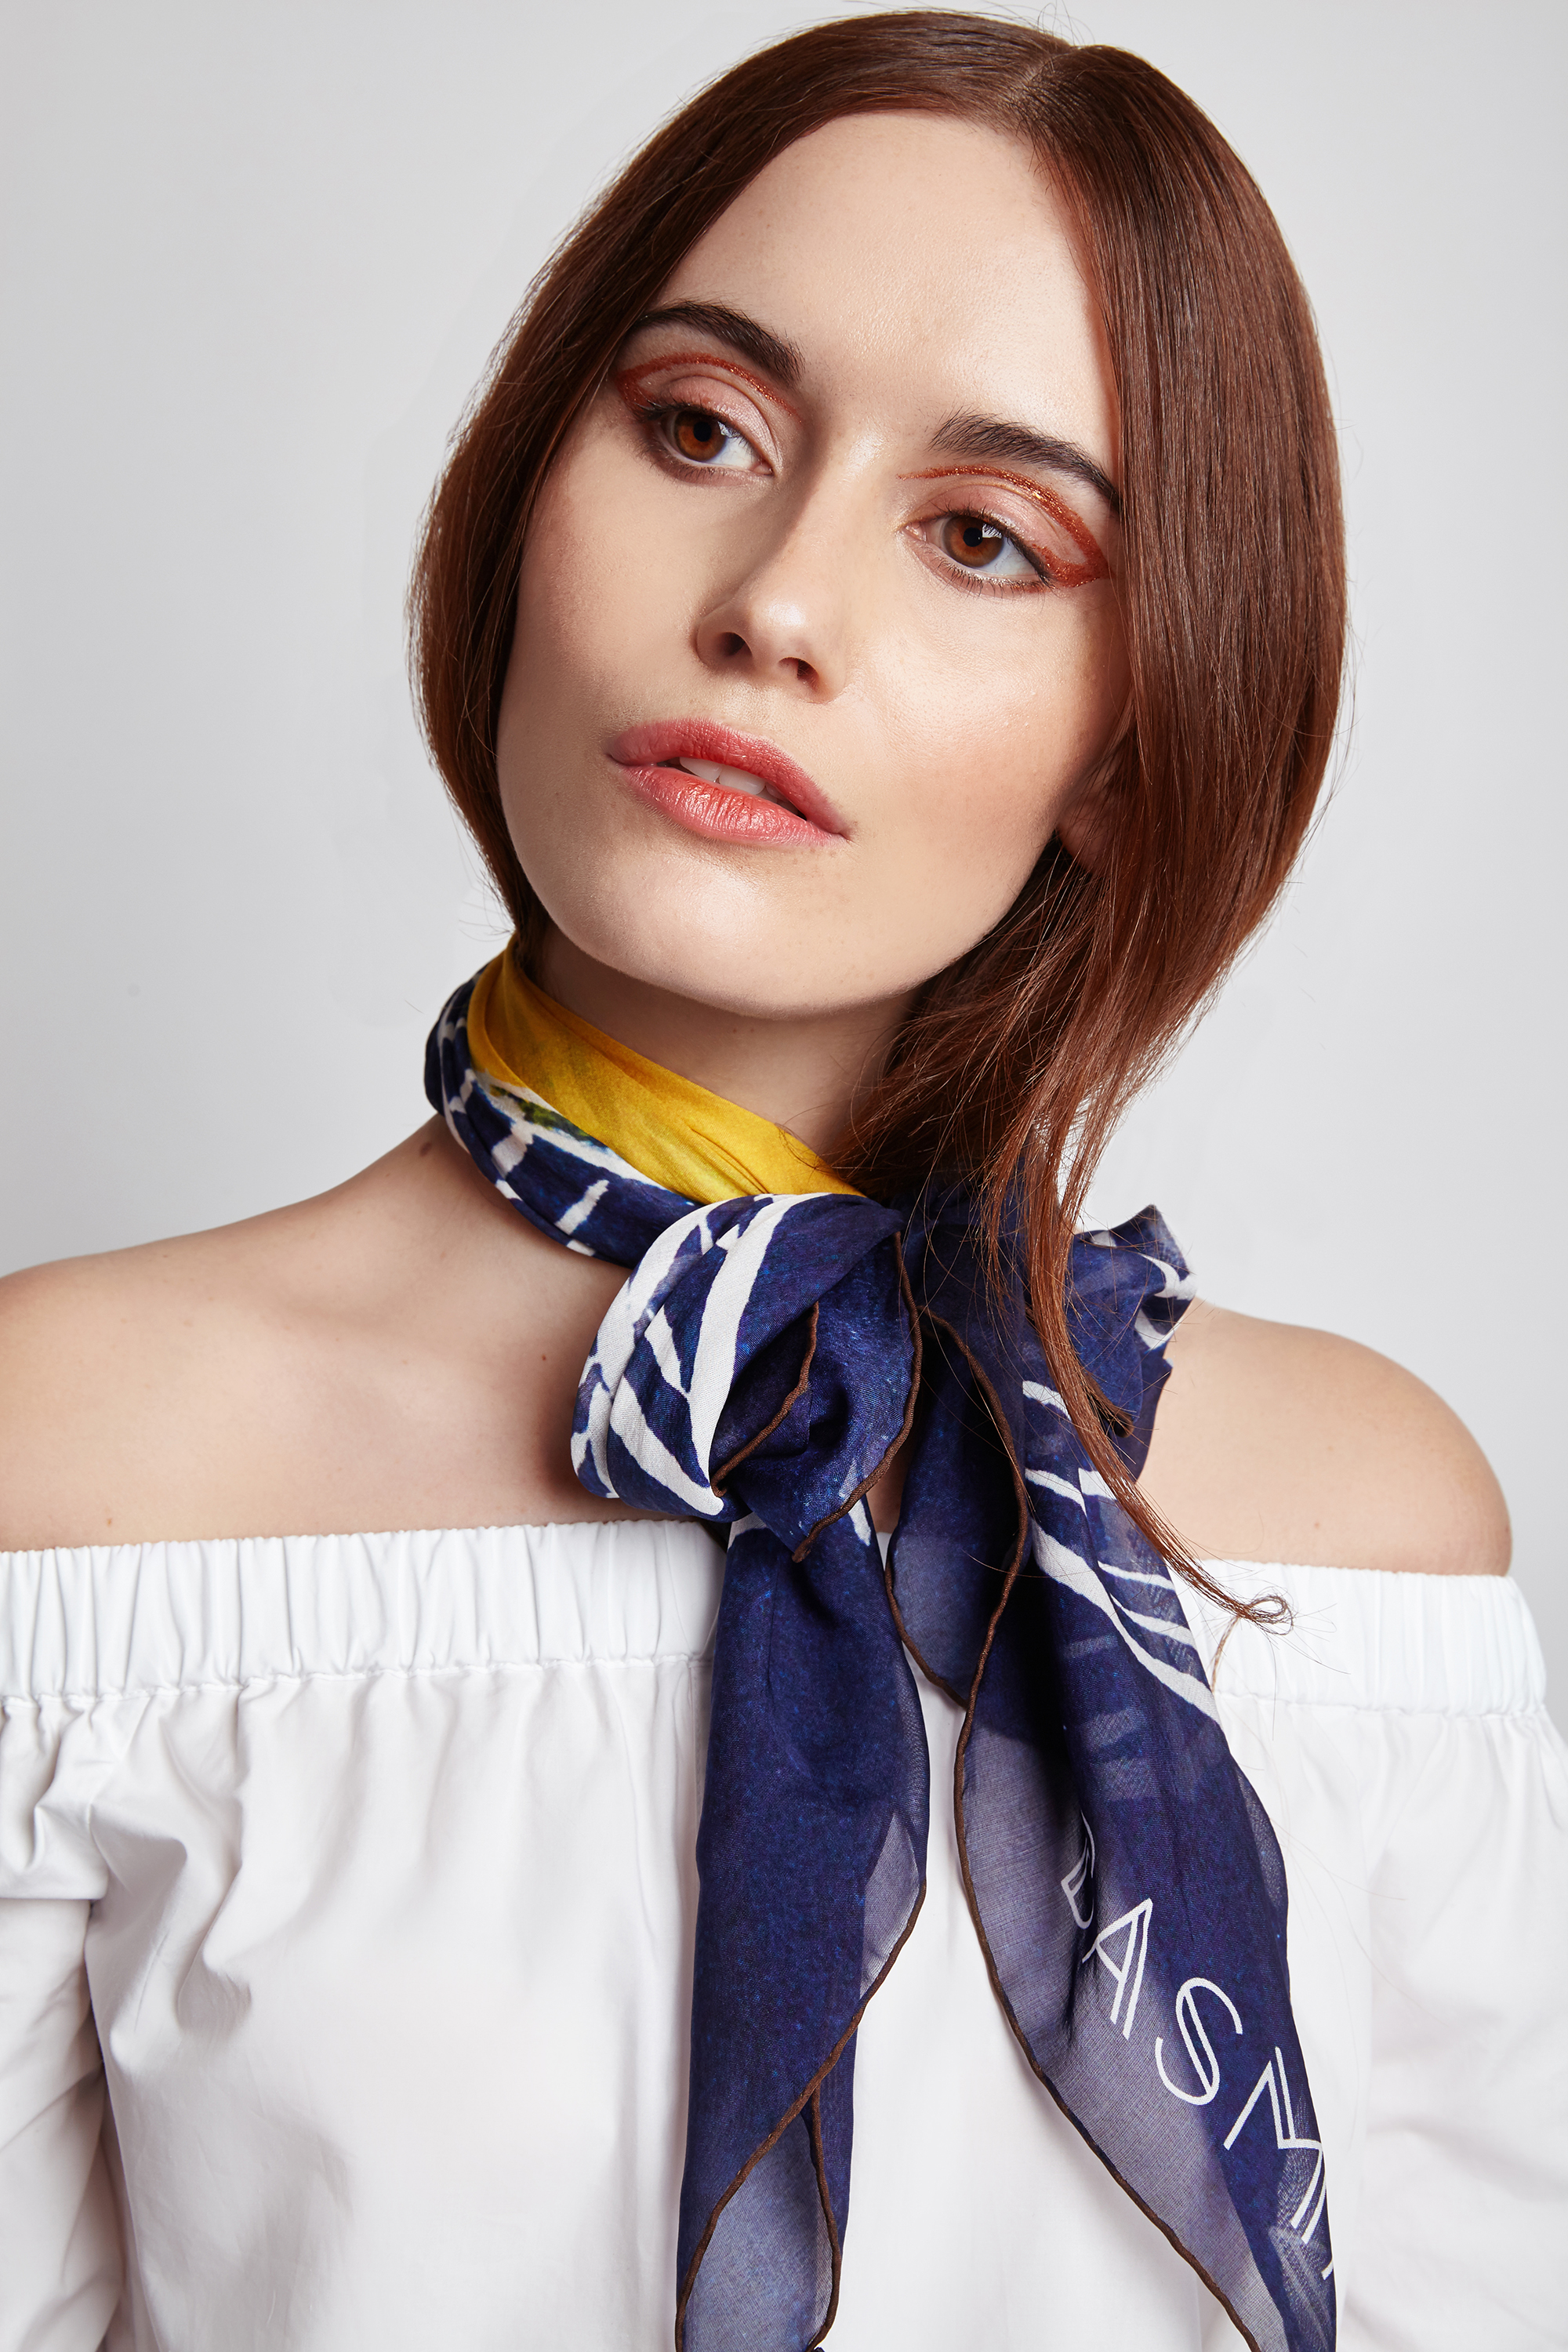 Hermès - Authenticated Scarf - Silk Blue Plain for Women, Never Worn